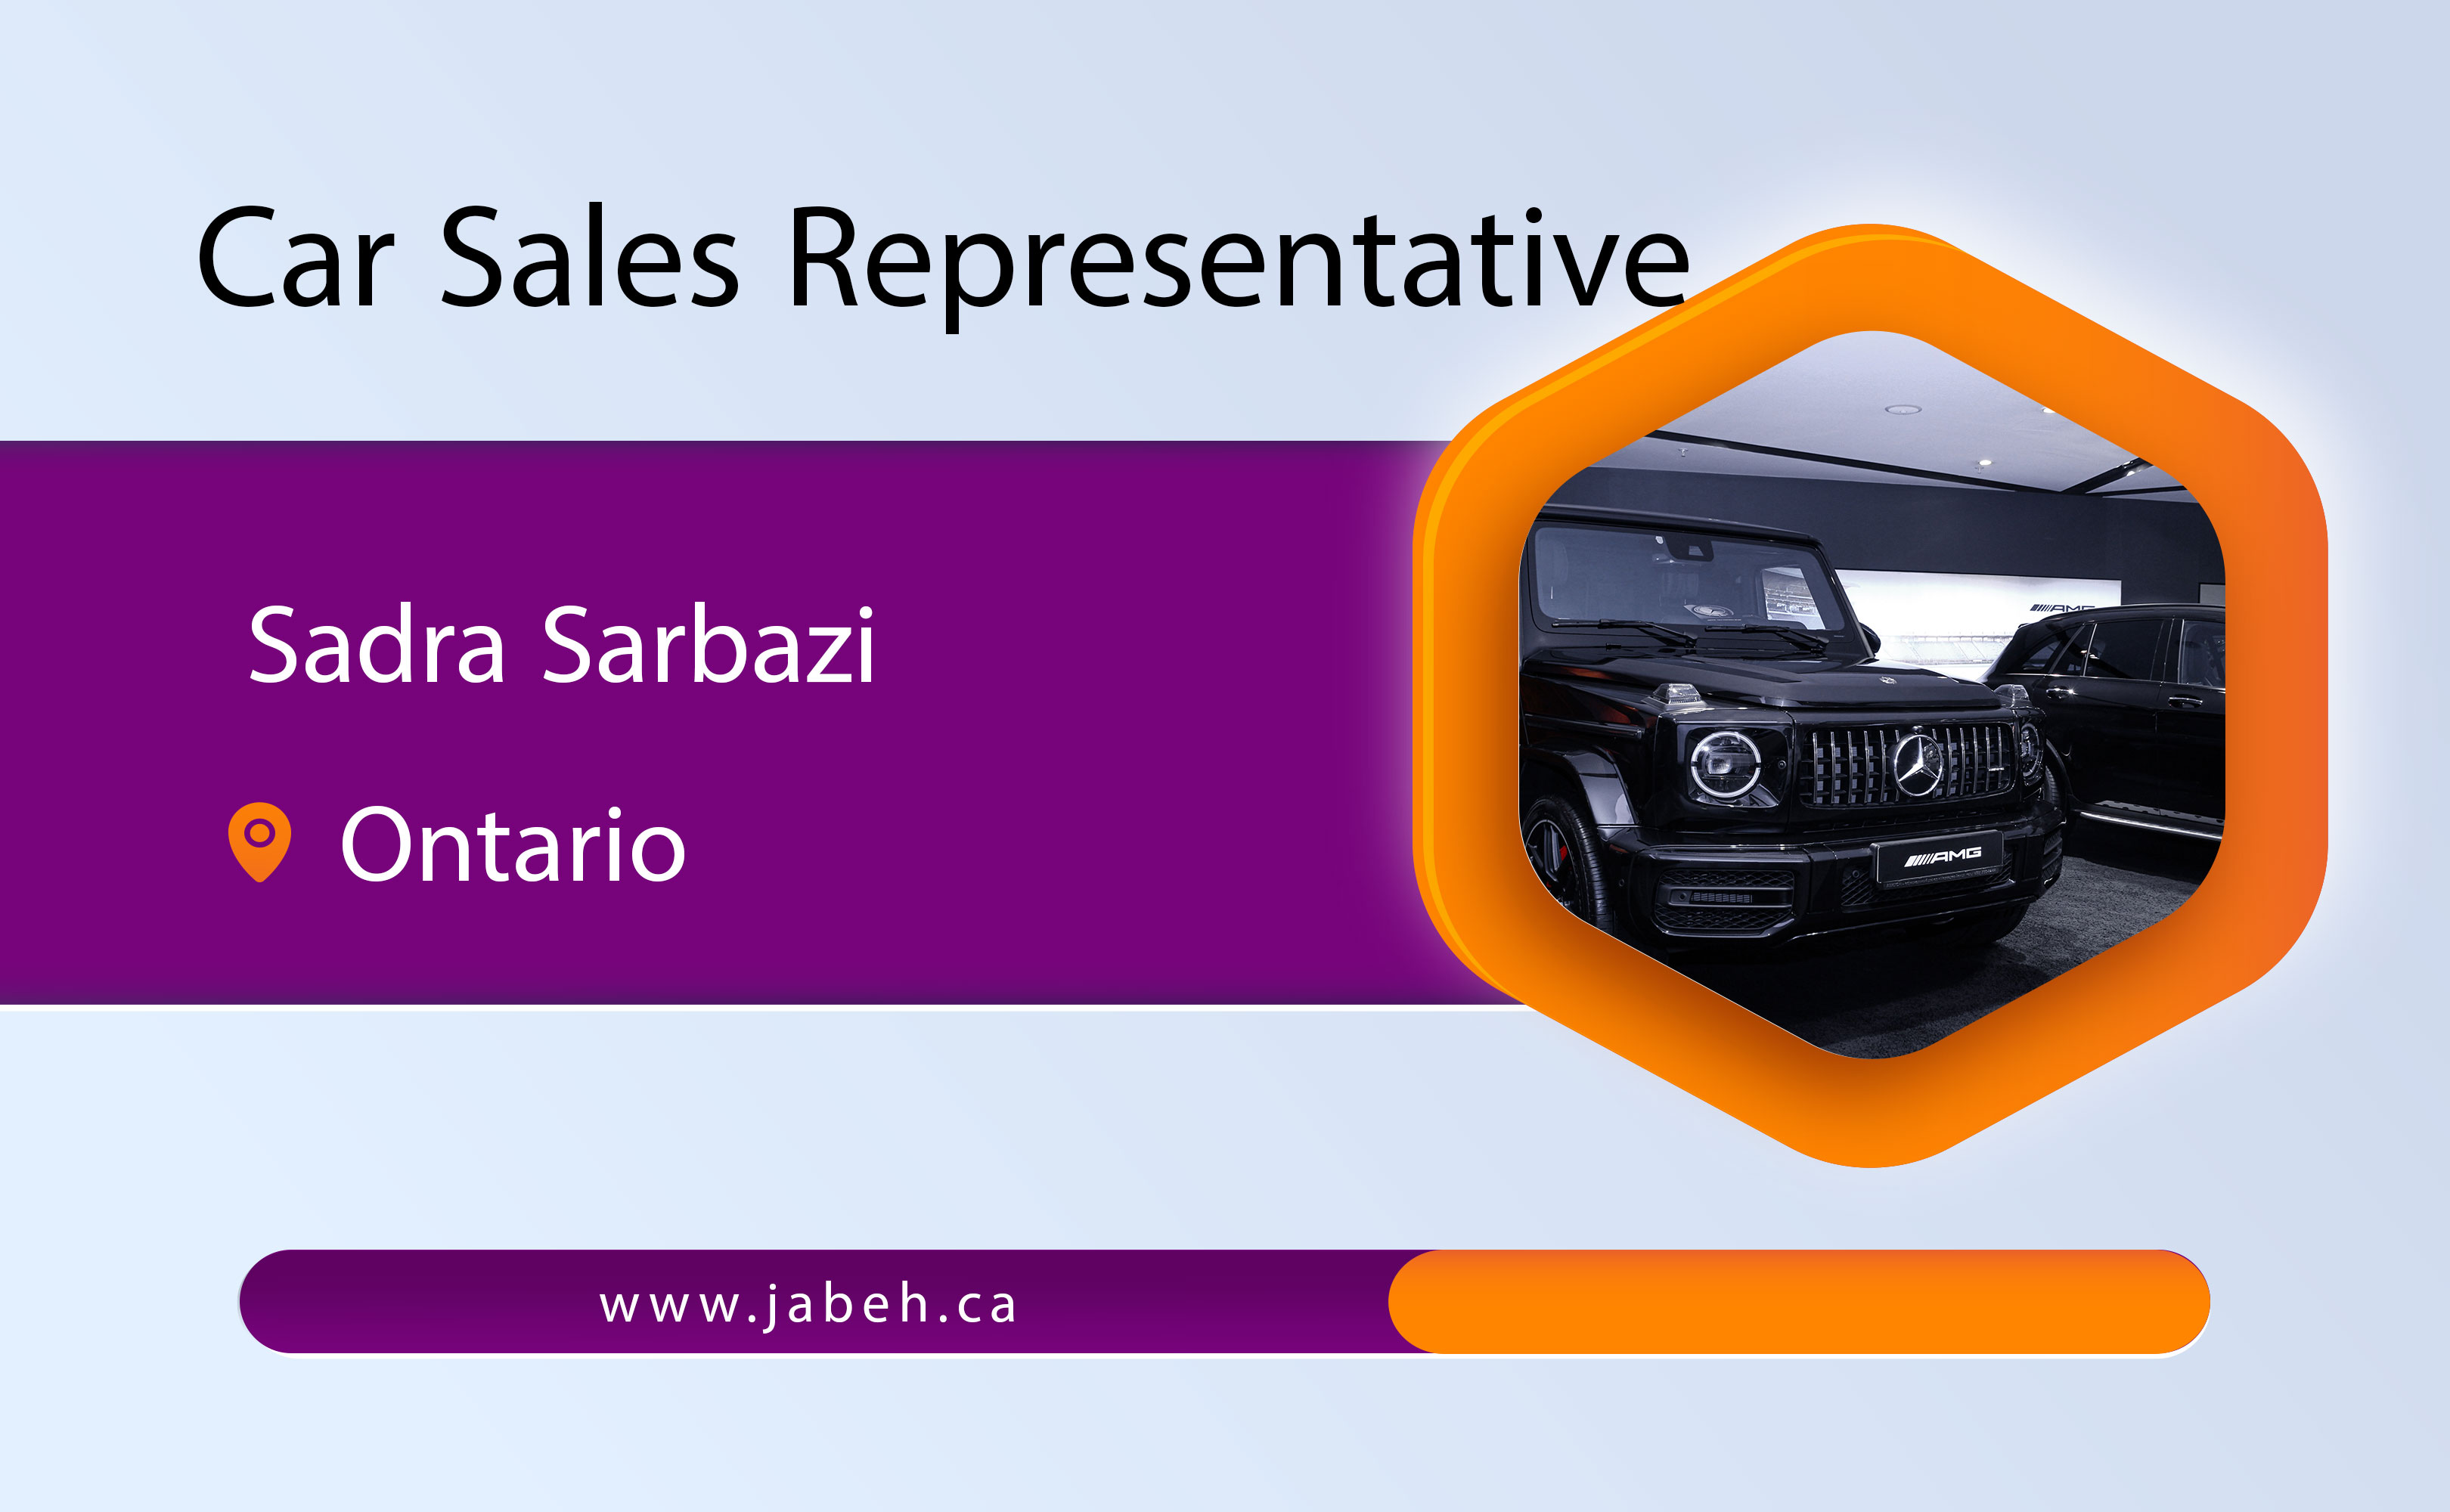 Iranian sales representative of Sadra Sarzabi cars in Ontario